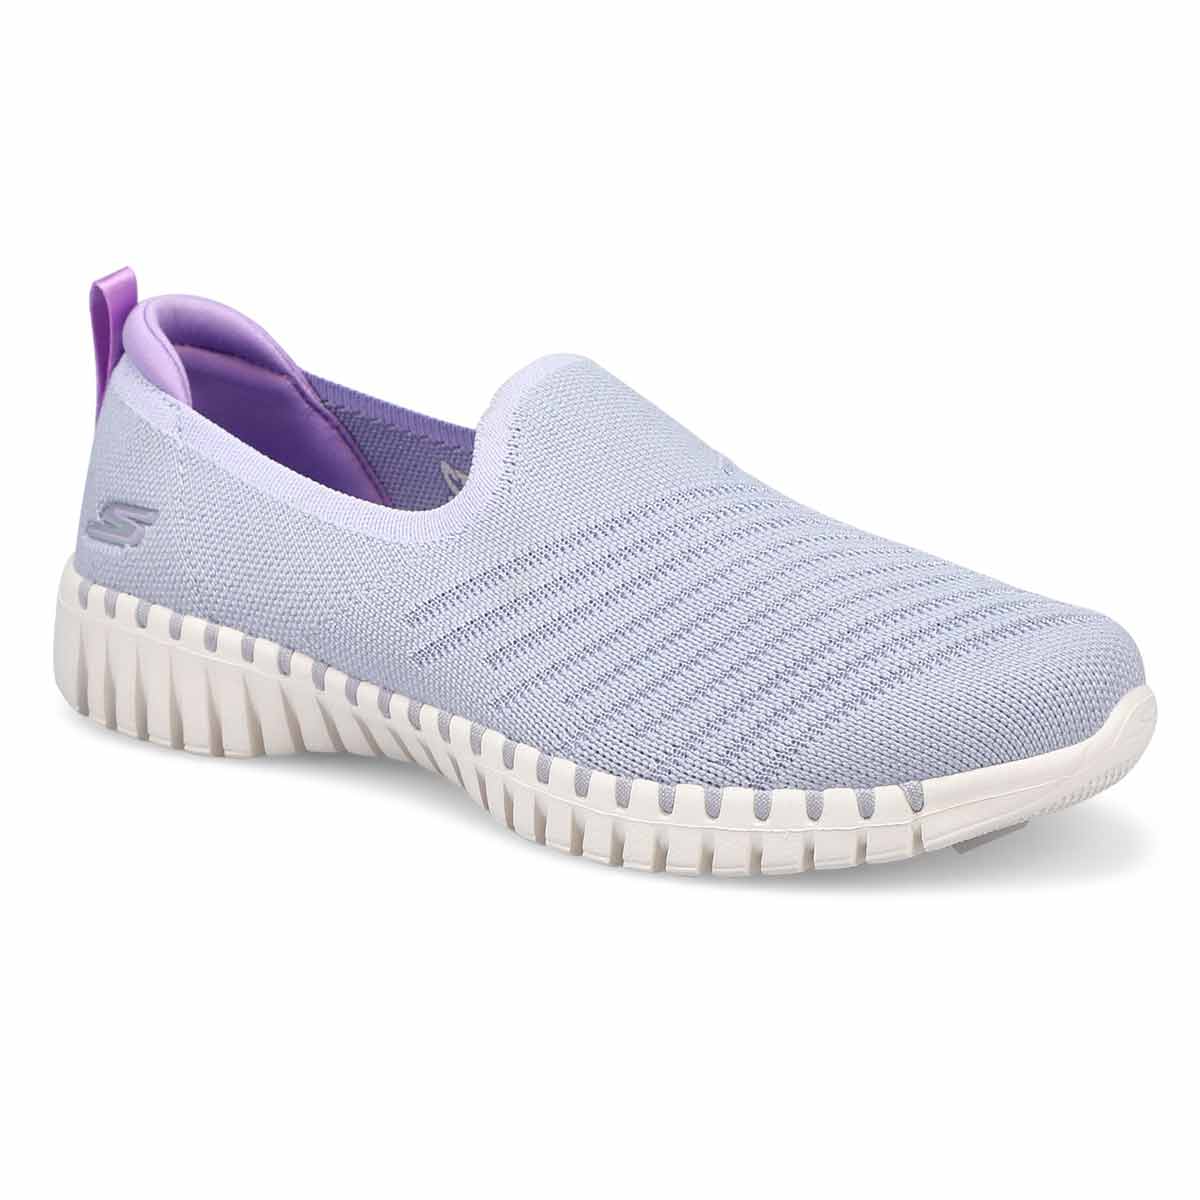 Women's Go Walk Smart Shoes - Grey/Lavender